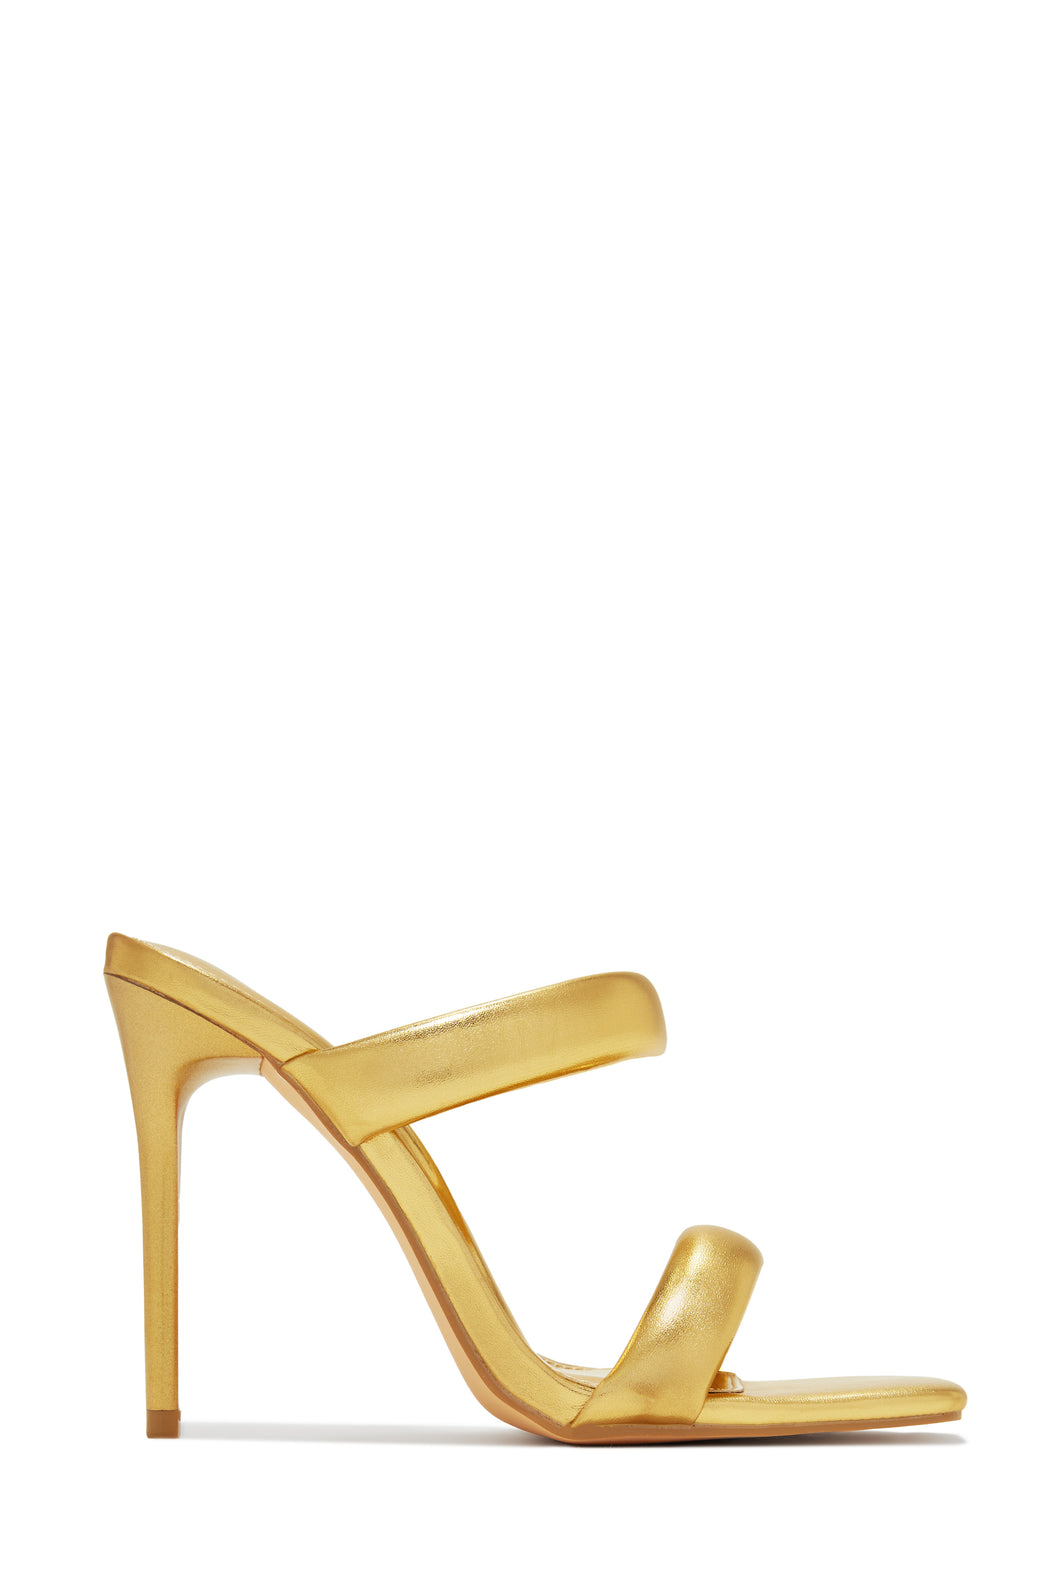 Stassie Single Sole High Heel Mules - Gold